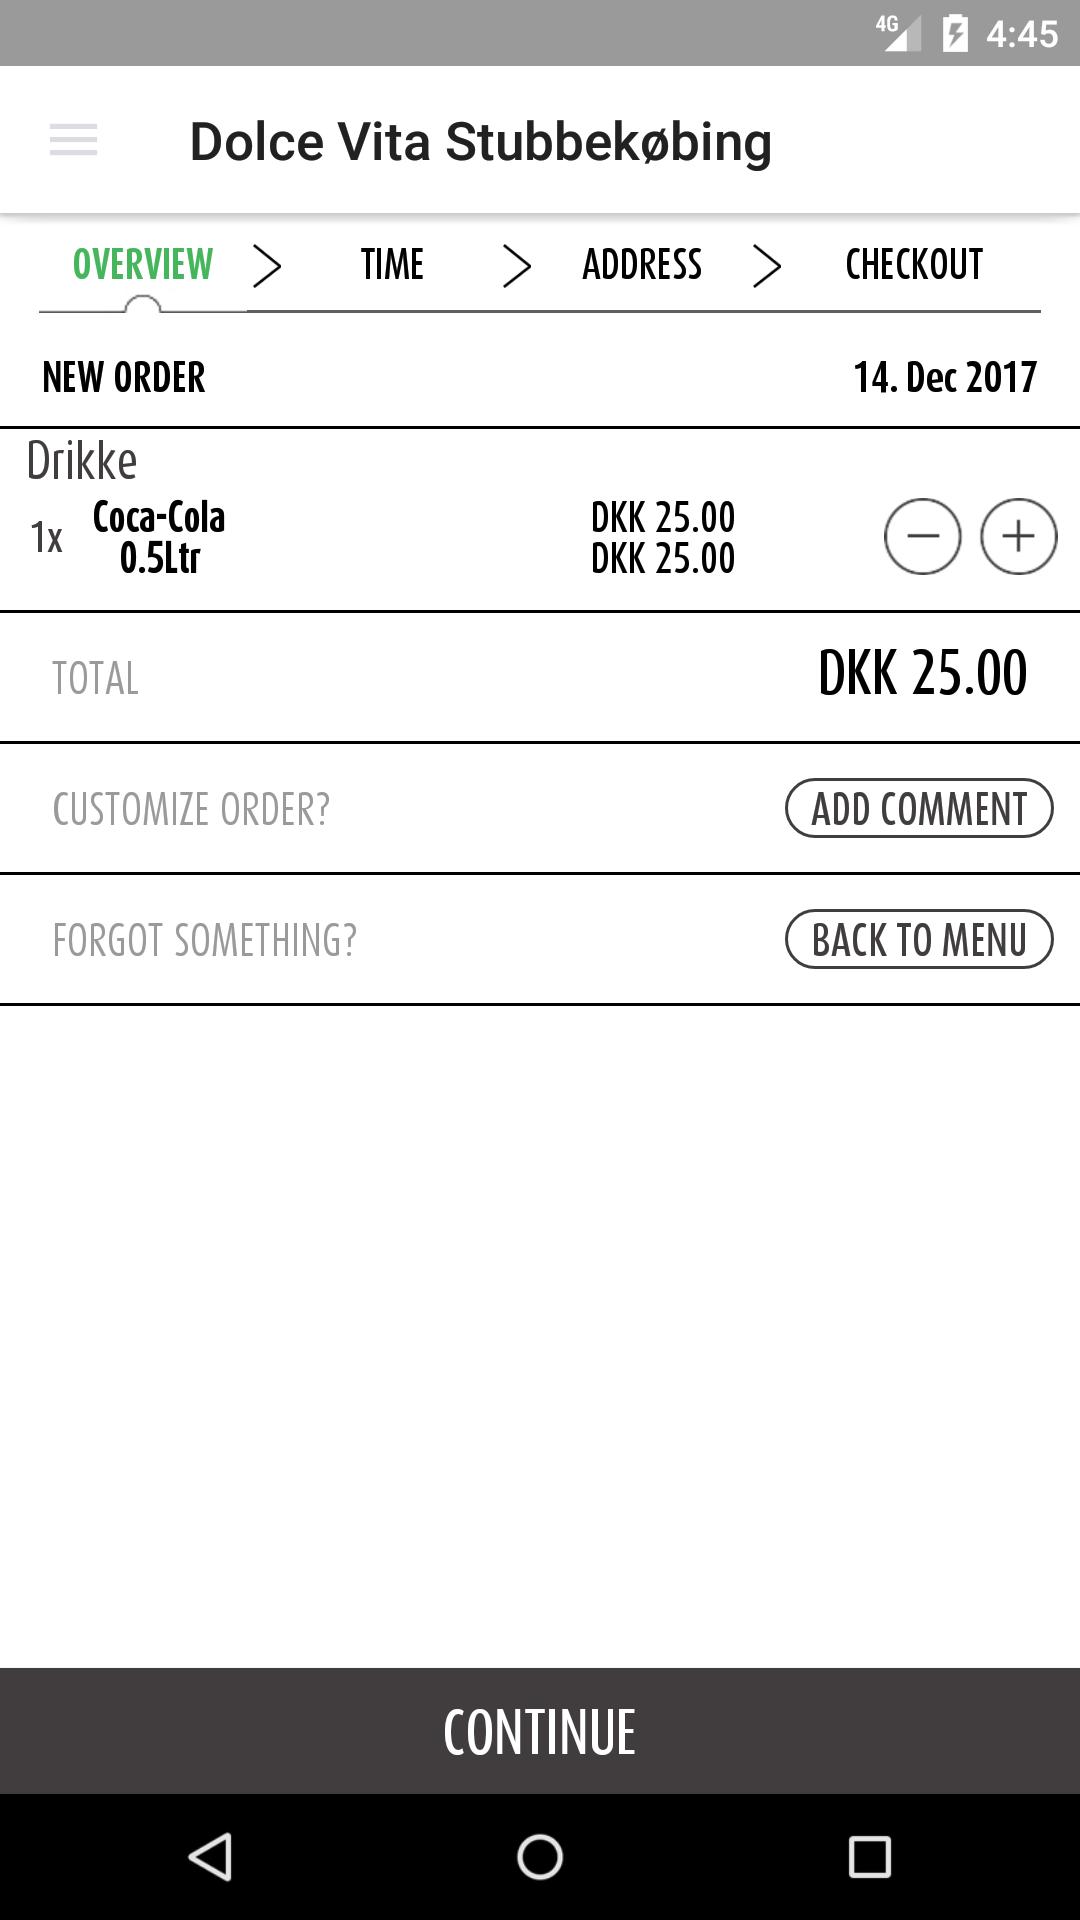 Dolce Vita Stubbekøbing for Android - APK Download